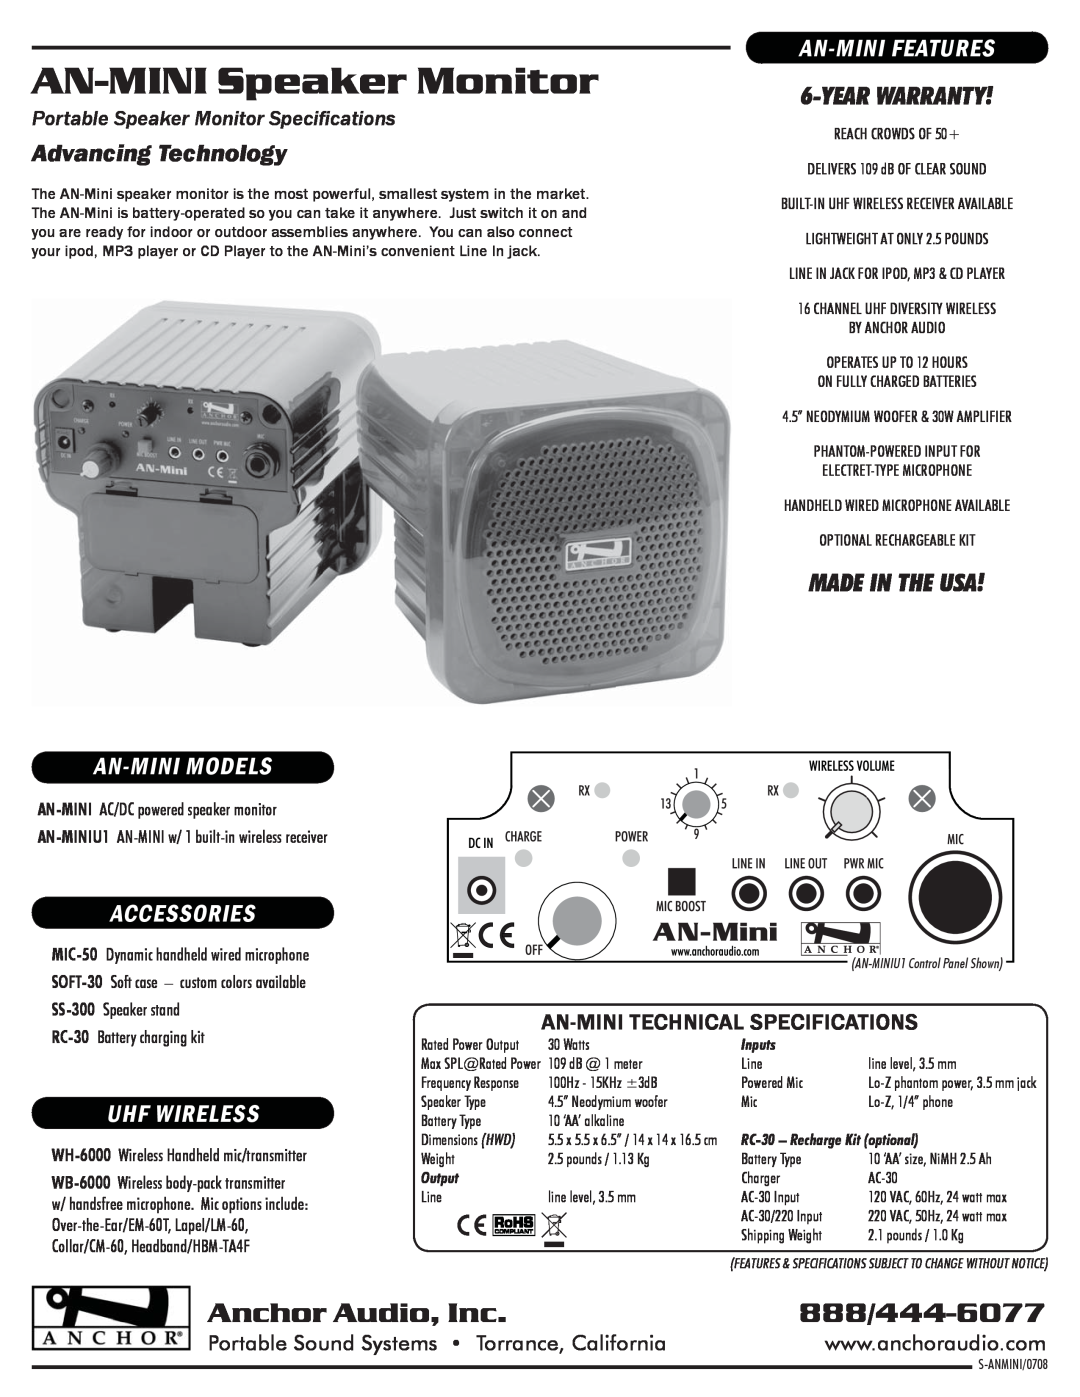 Anchor Audio AN-Mini warranty AN-MINISpeaker Monitor, Anchor Audio, Inc, 888/444-6077, An-Minifeatures, An-Minimodels 